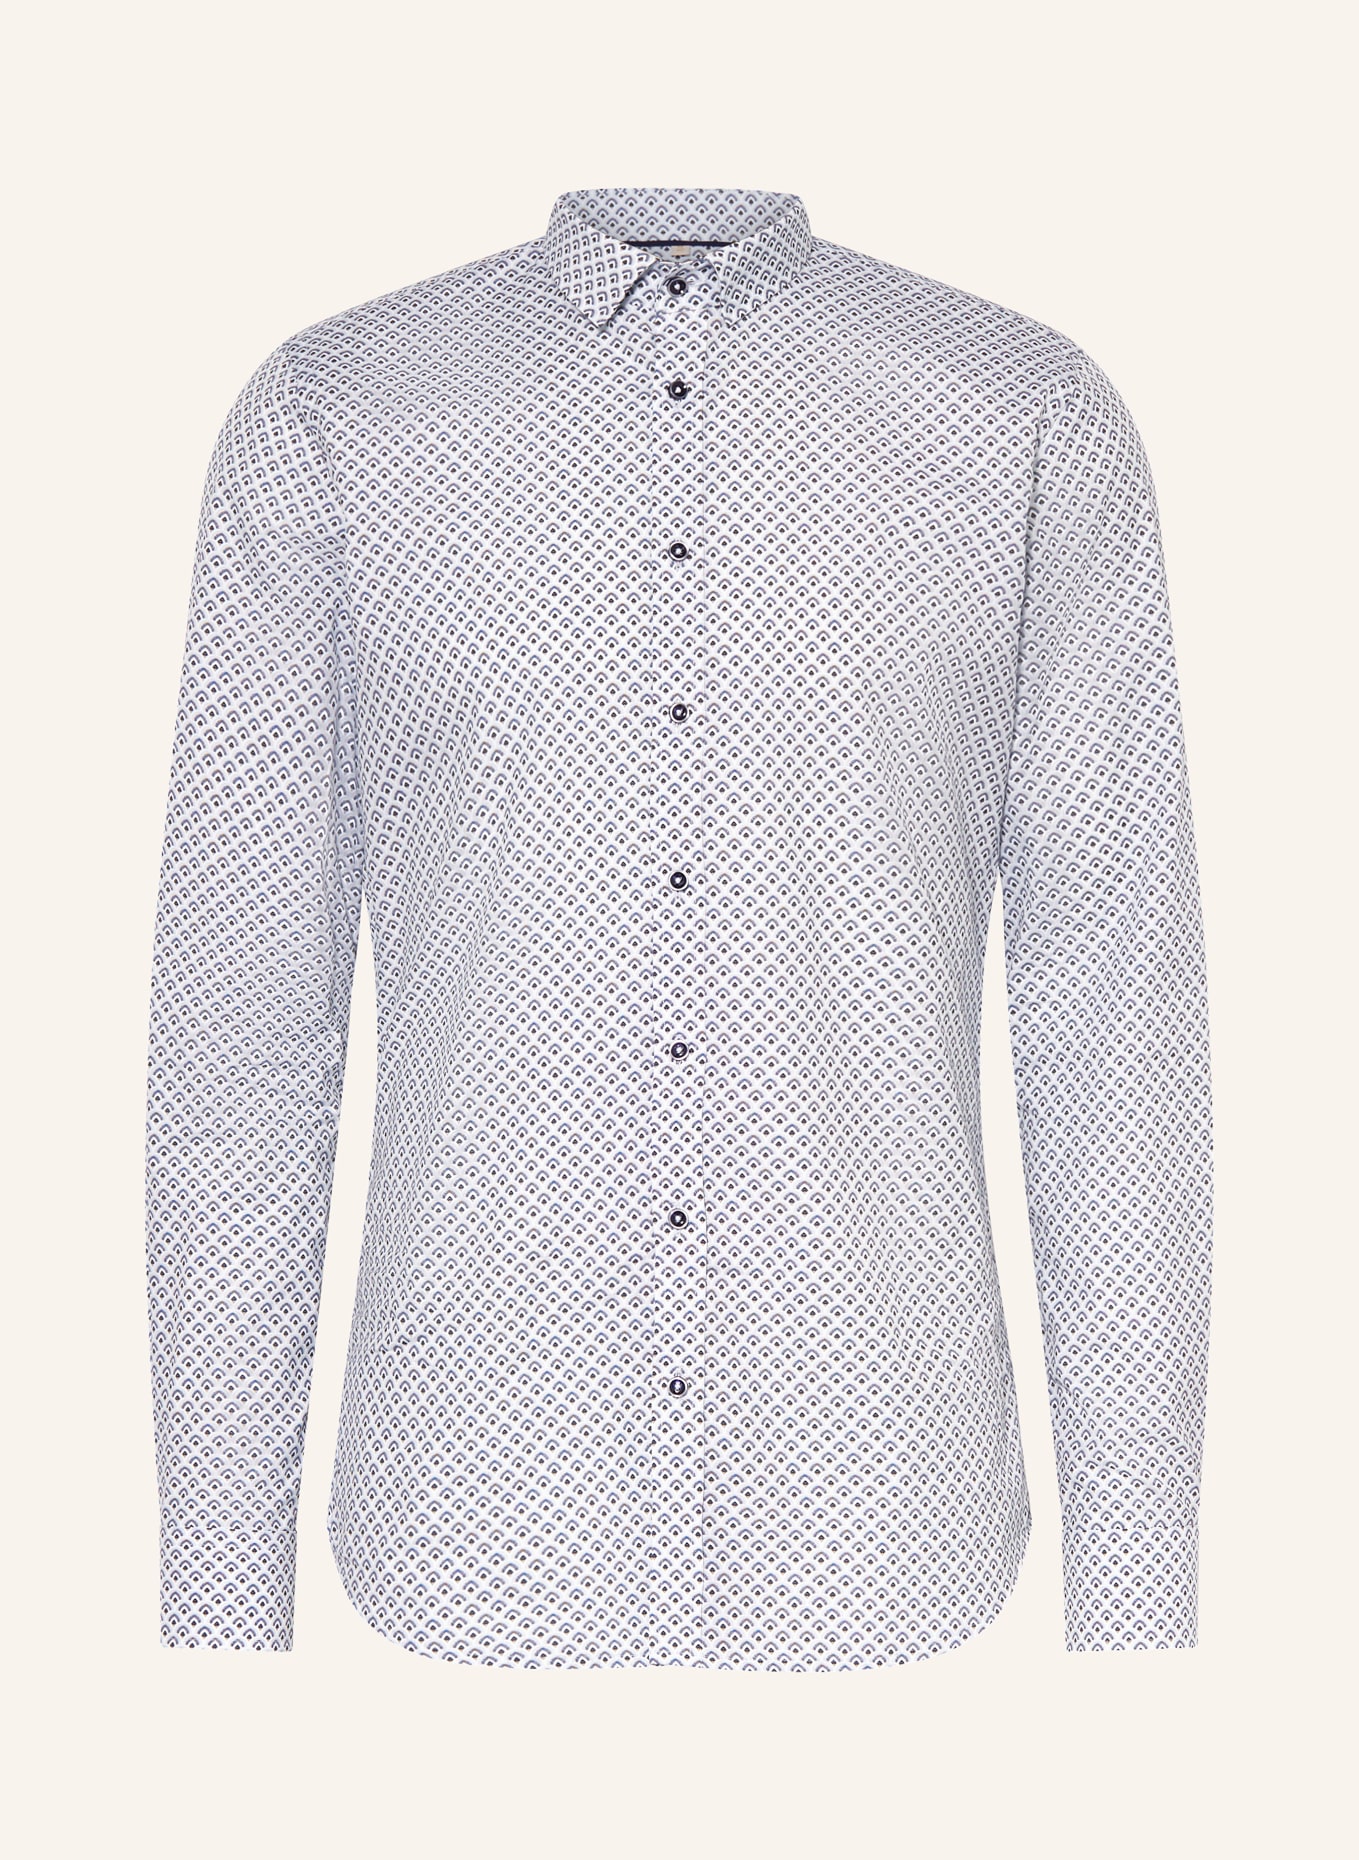 Q1 Manufaktur Hemd Extra Slim Fit, Farbe: BLAU/ WEISS/ BEIGE (Bild 1)